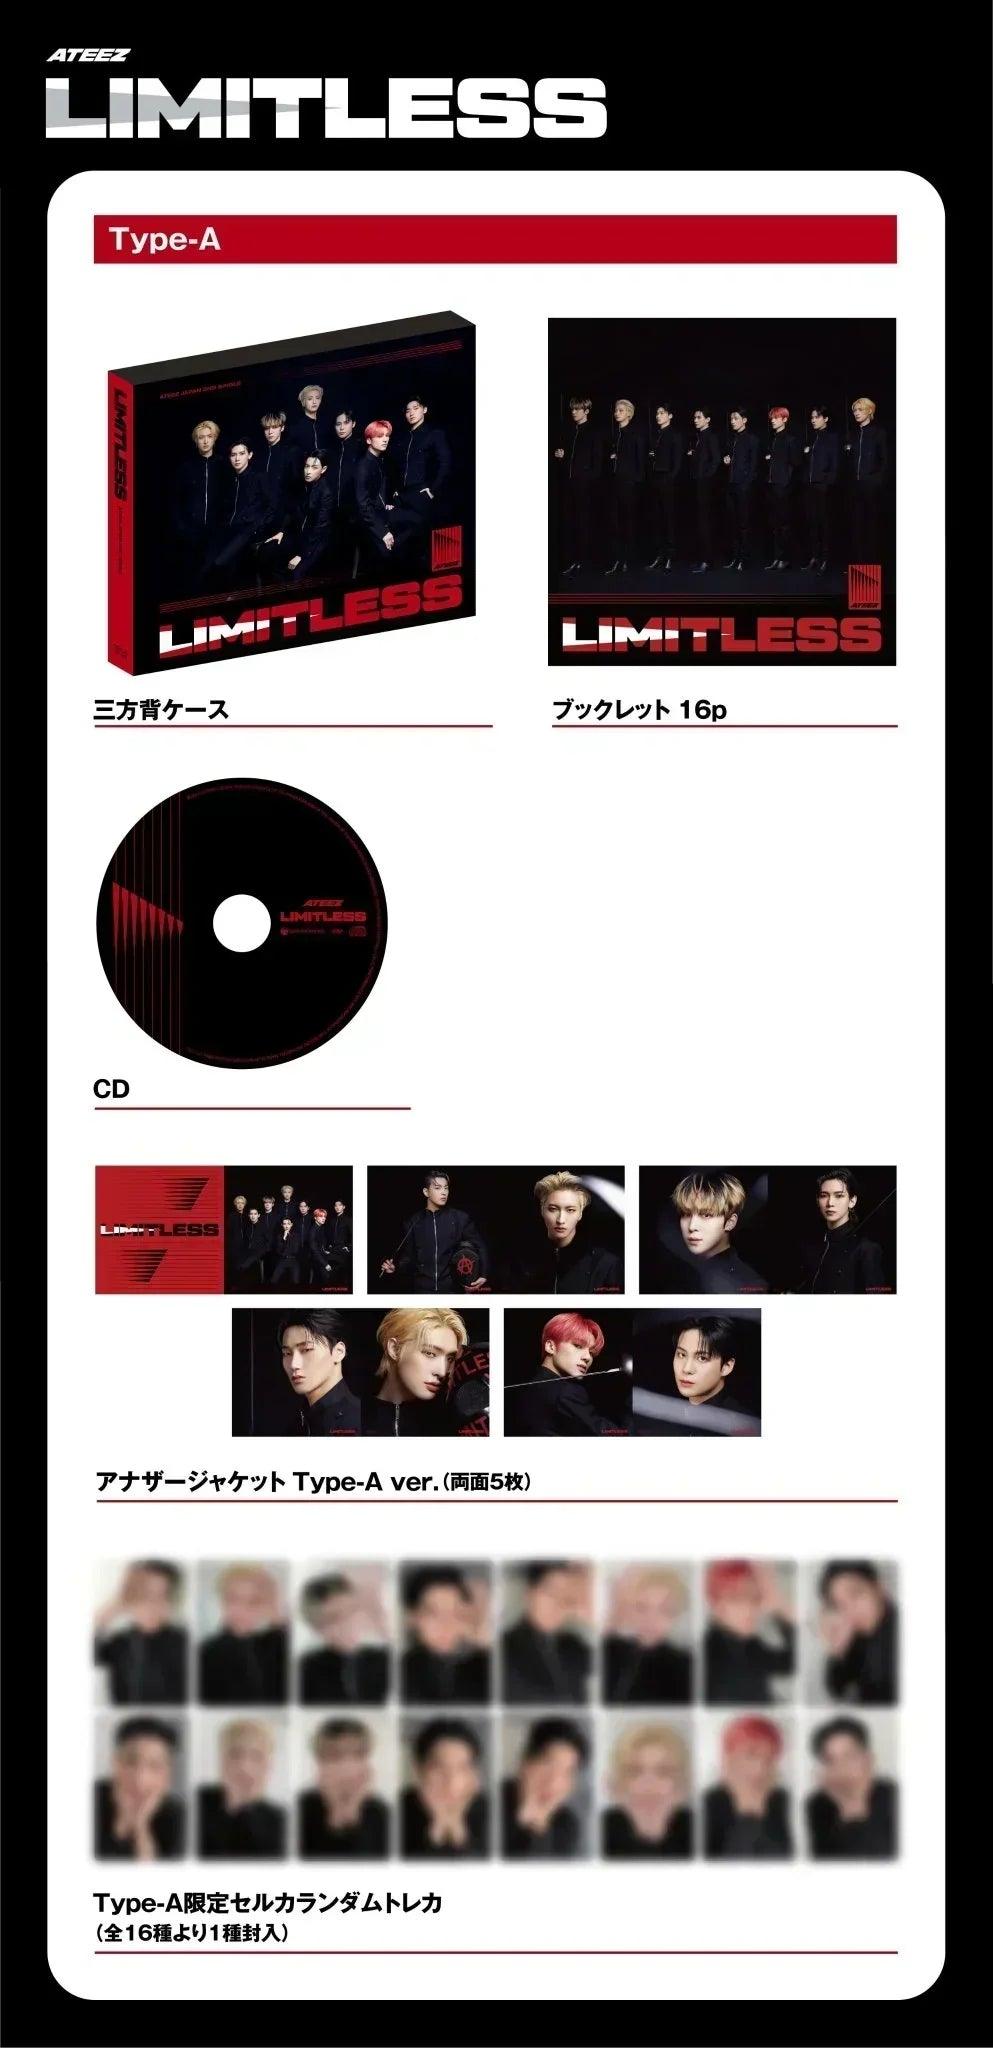 ATEEZ - LIMITLESS JAPAN 2ND SINGLE ALBUM - K-POP WORLD (7375824519303)